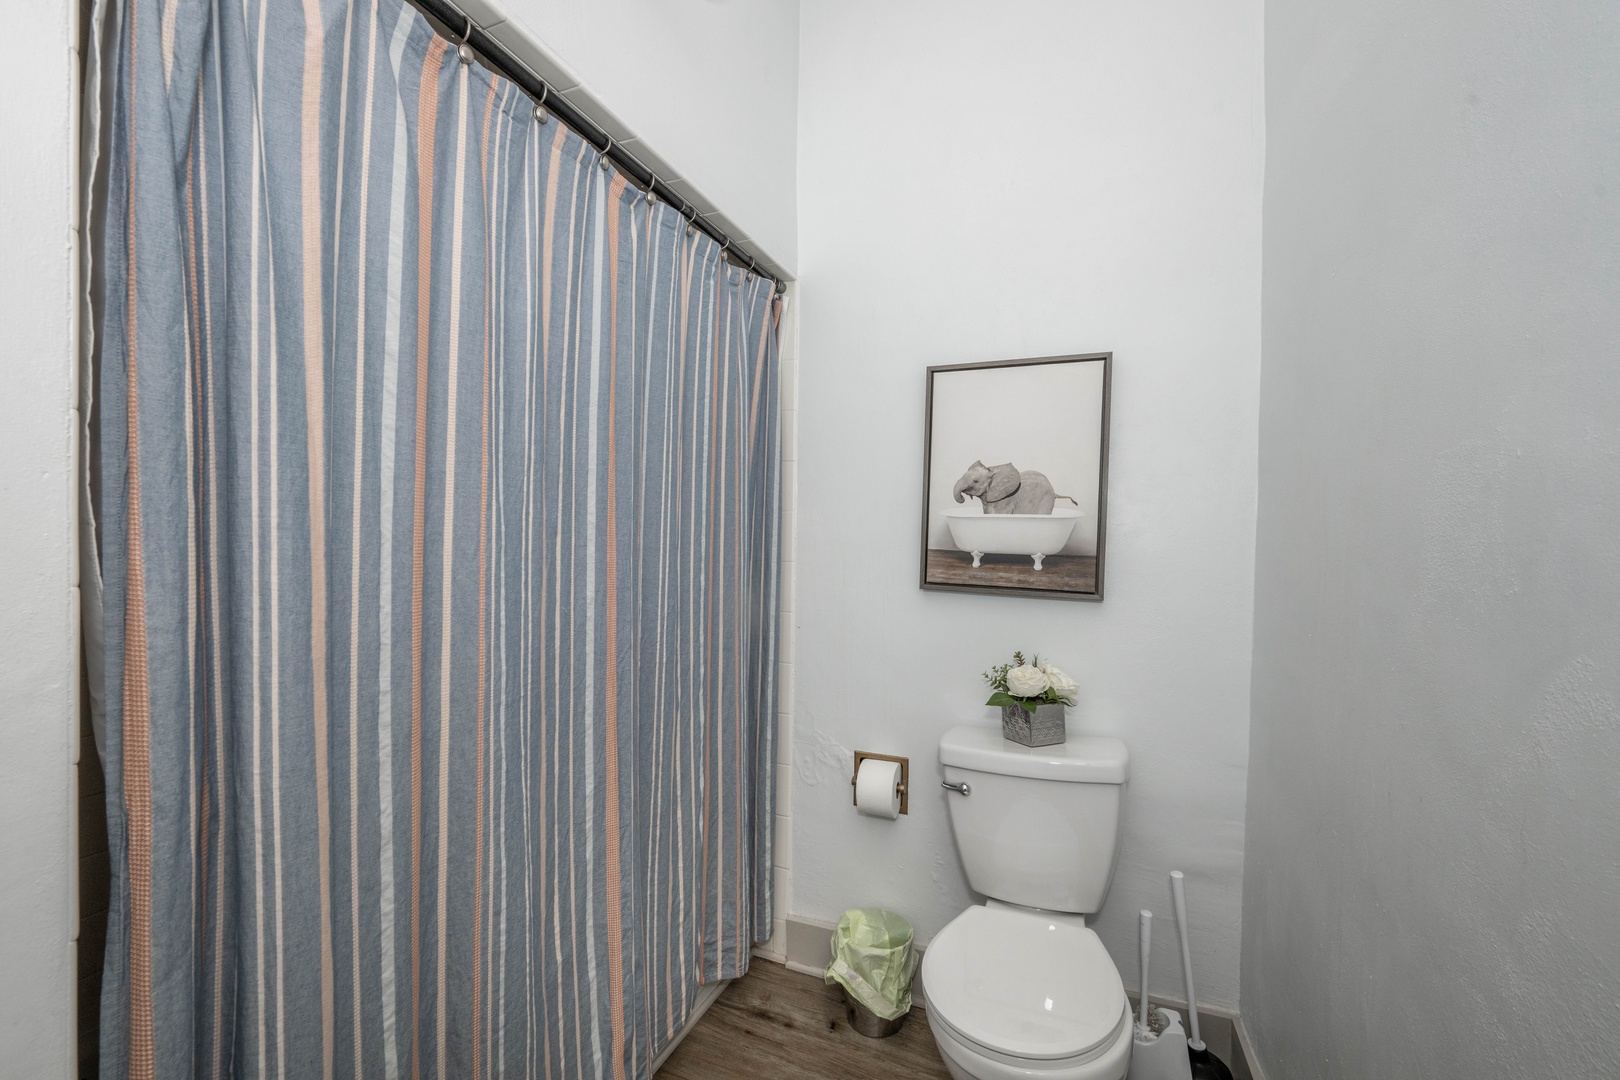 The full bathroom features a sleek single vanity & shower/tub combo